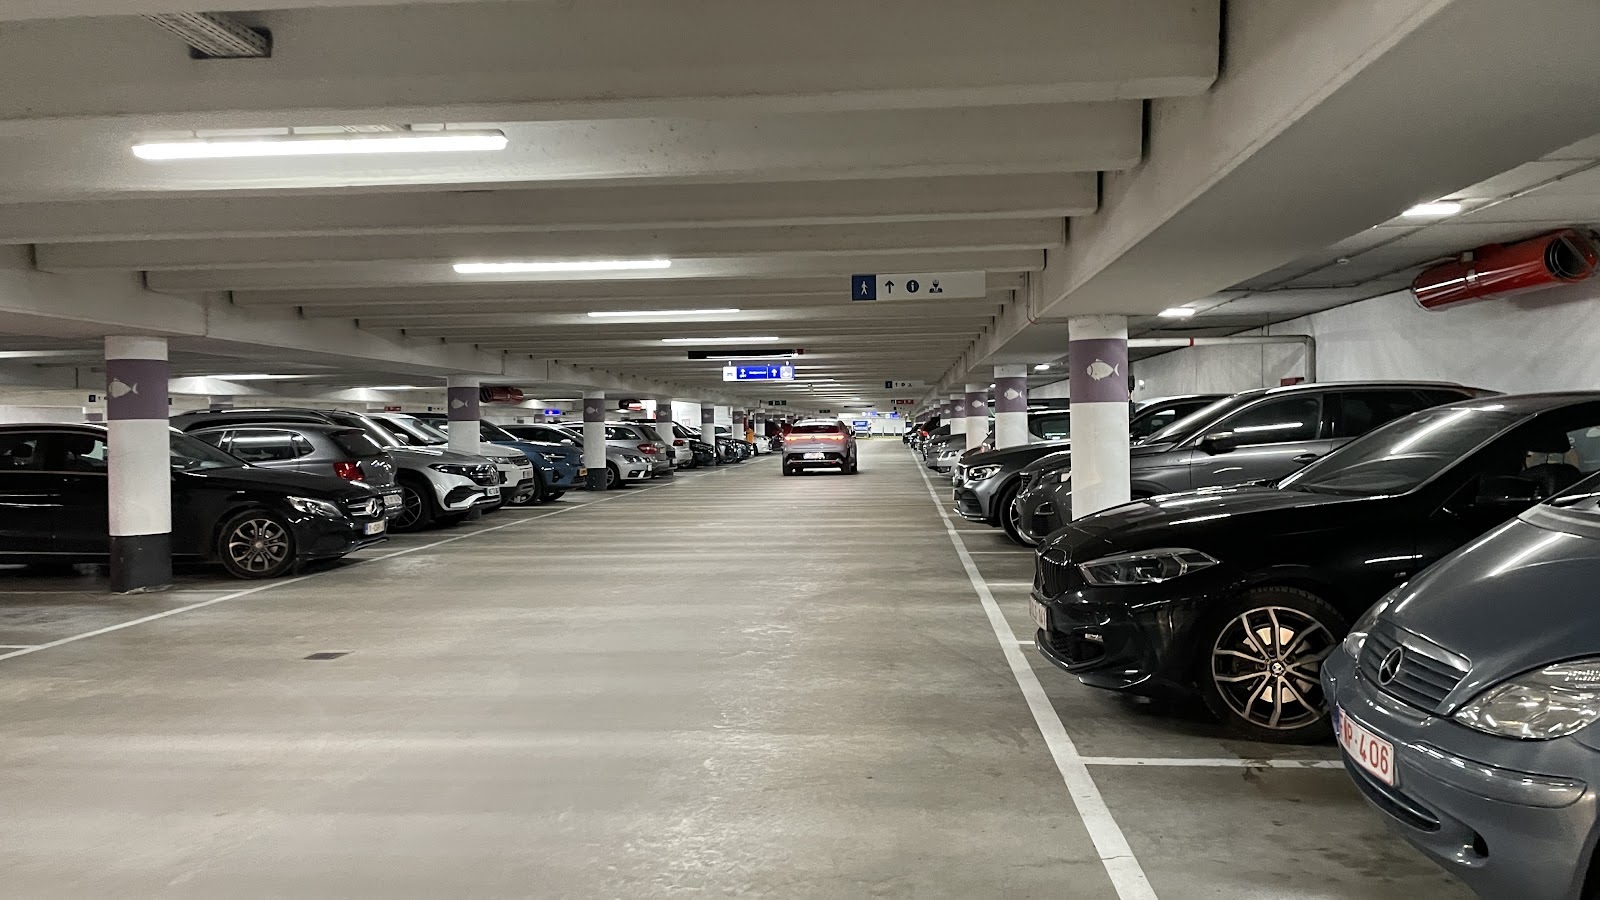 Underground parking garage - Pandreitje (capacity 212)